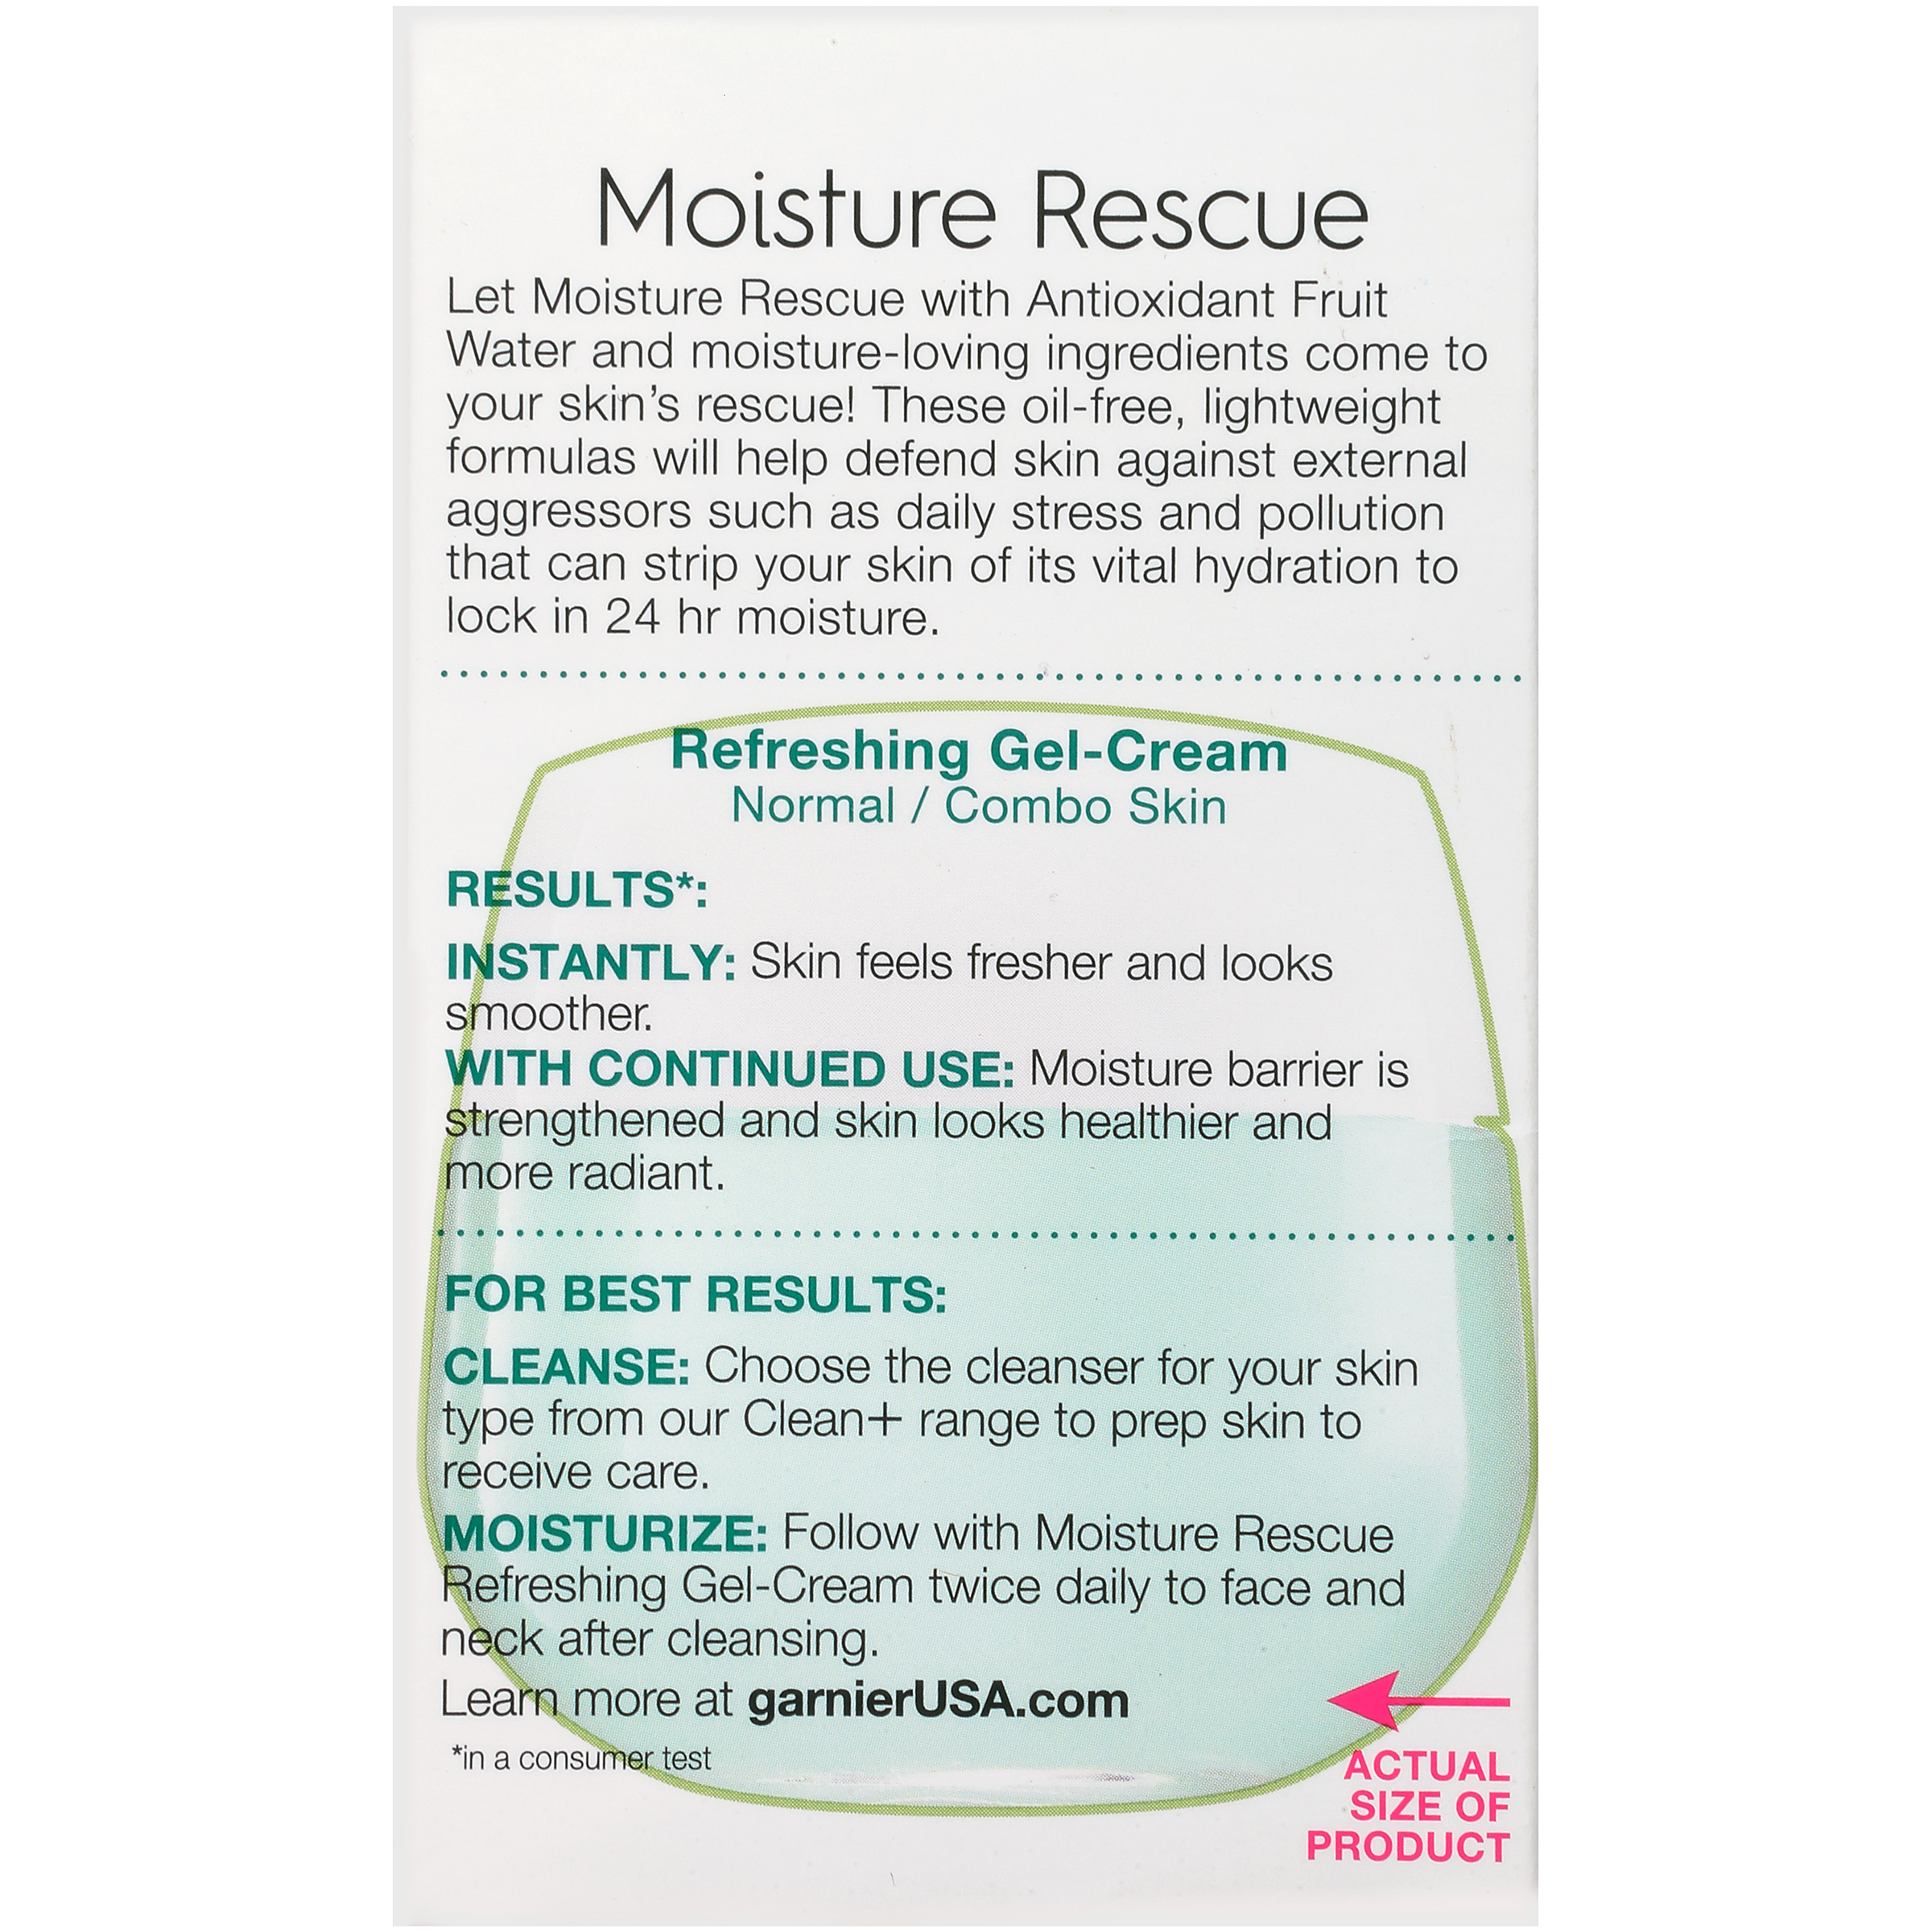 Garnier SkinActive Moisture Rescue Refreshing Gel Cream Normal and Combo Skin, 1.7 oz - image 3 of 8